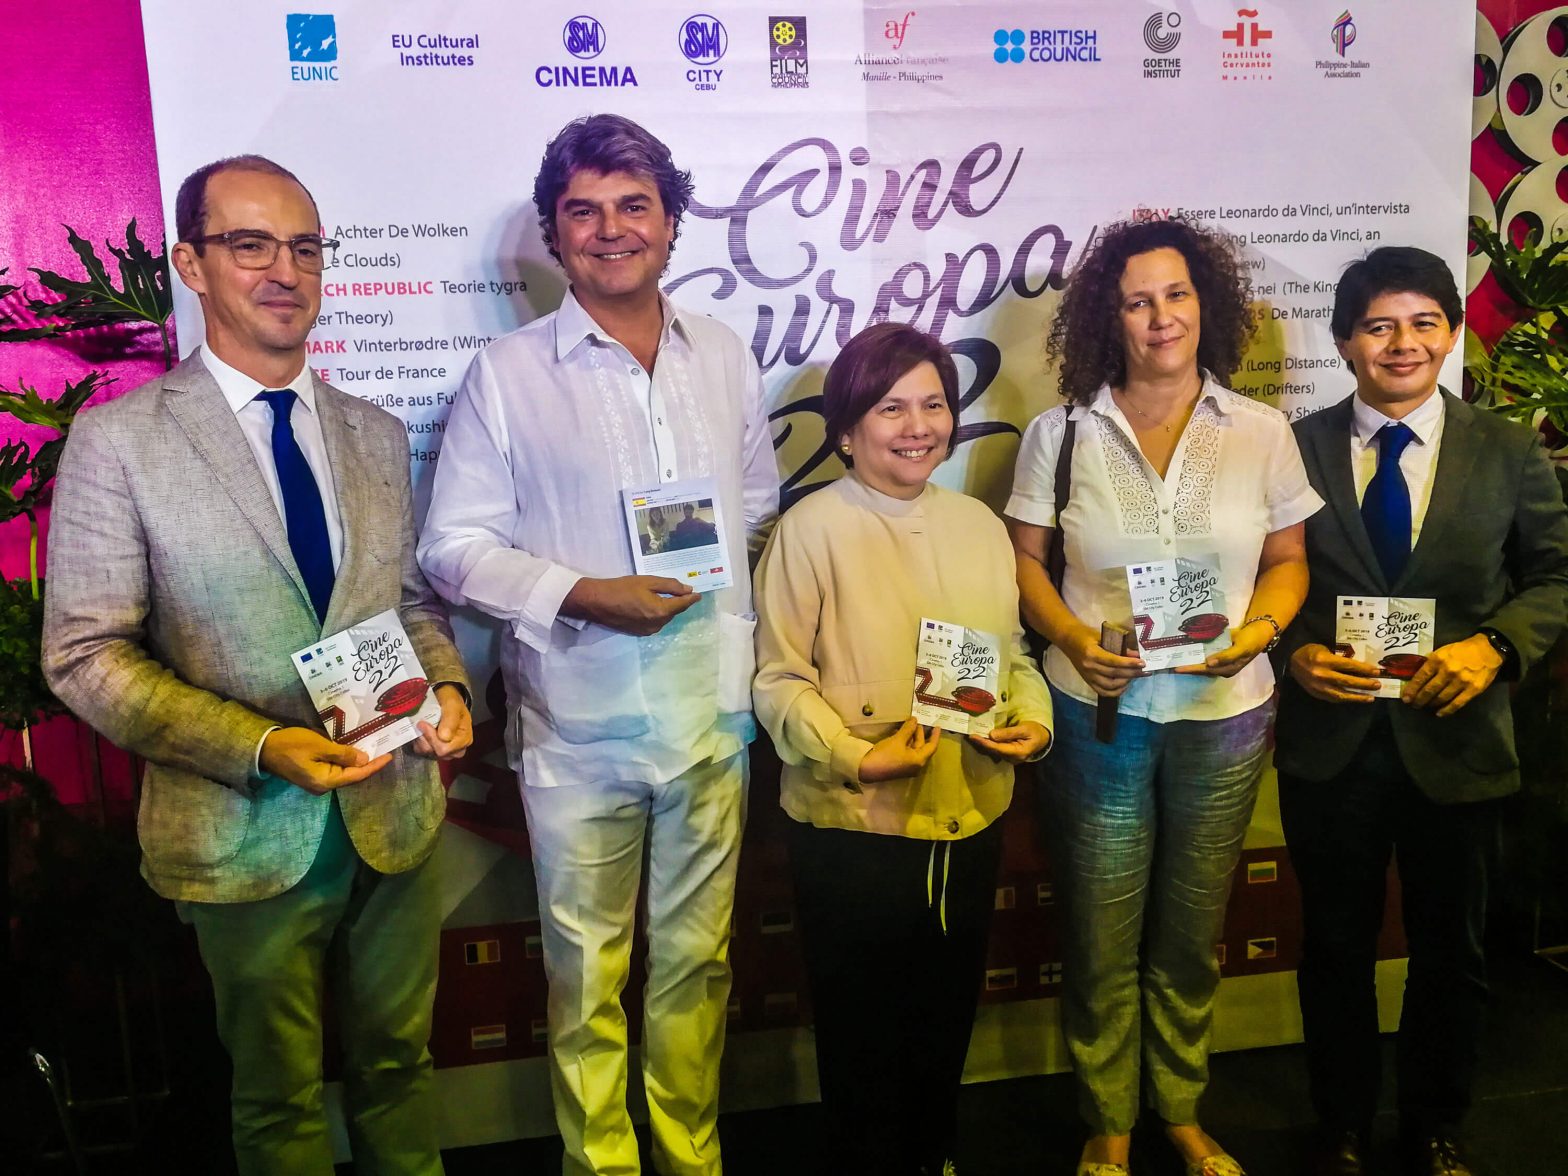 Cine Europa 22 celebrates Europe-Philippine ties, brings European films for free screening to 8 cities